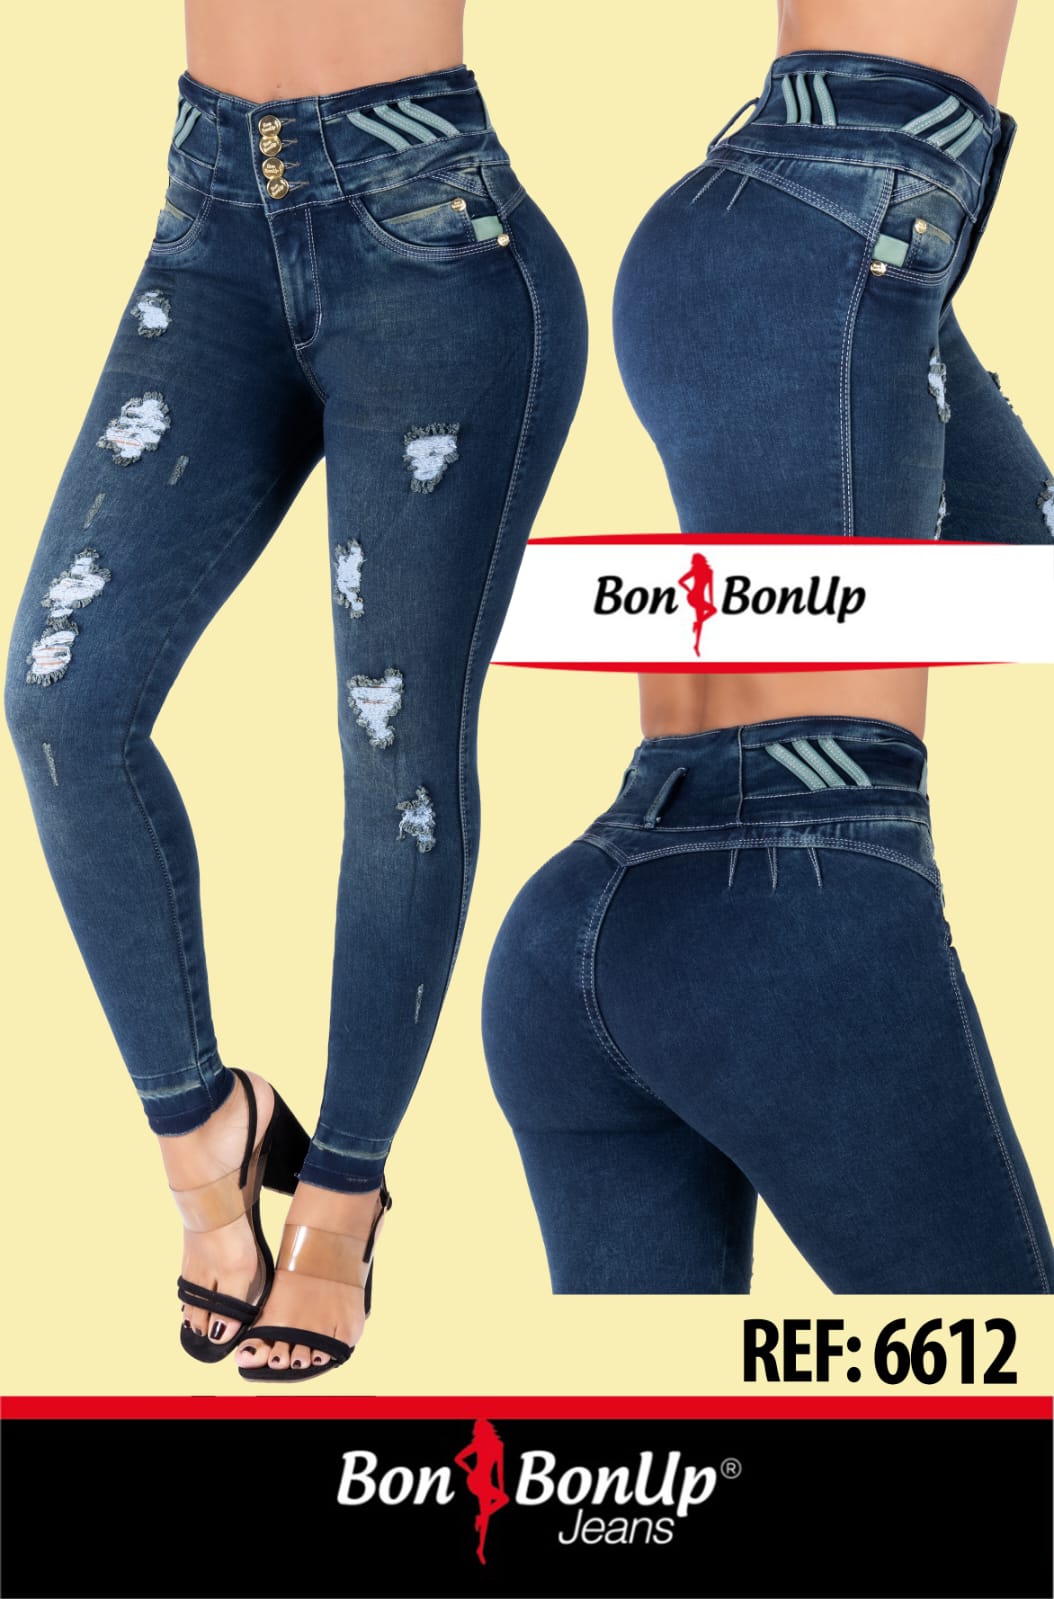 BUTT-LIFT JEANS BY BON BON UP – Tammy's High Fashion